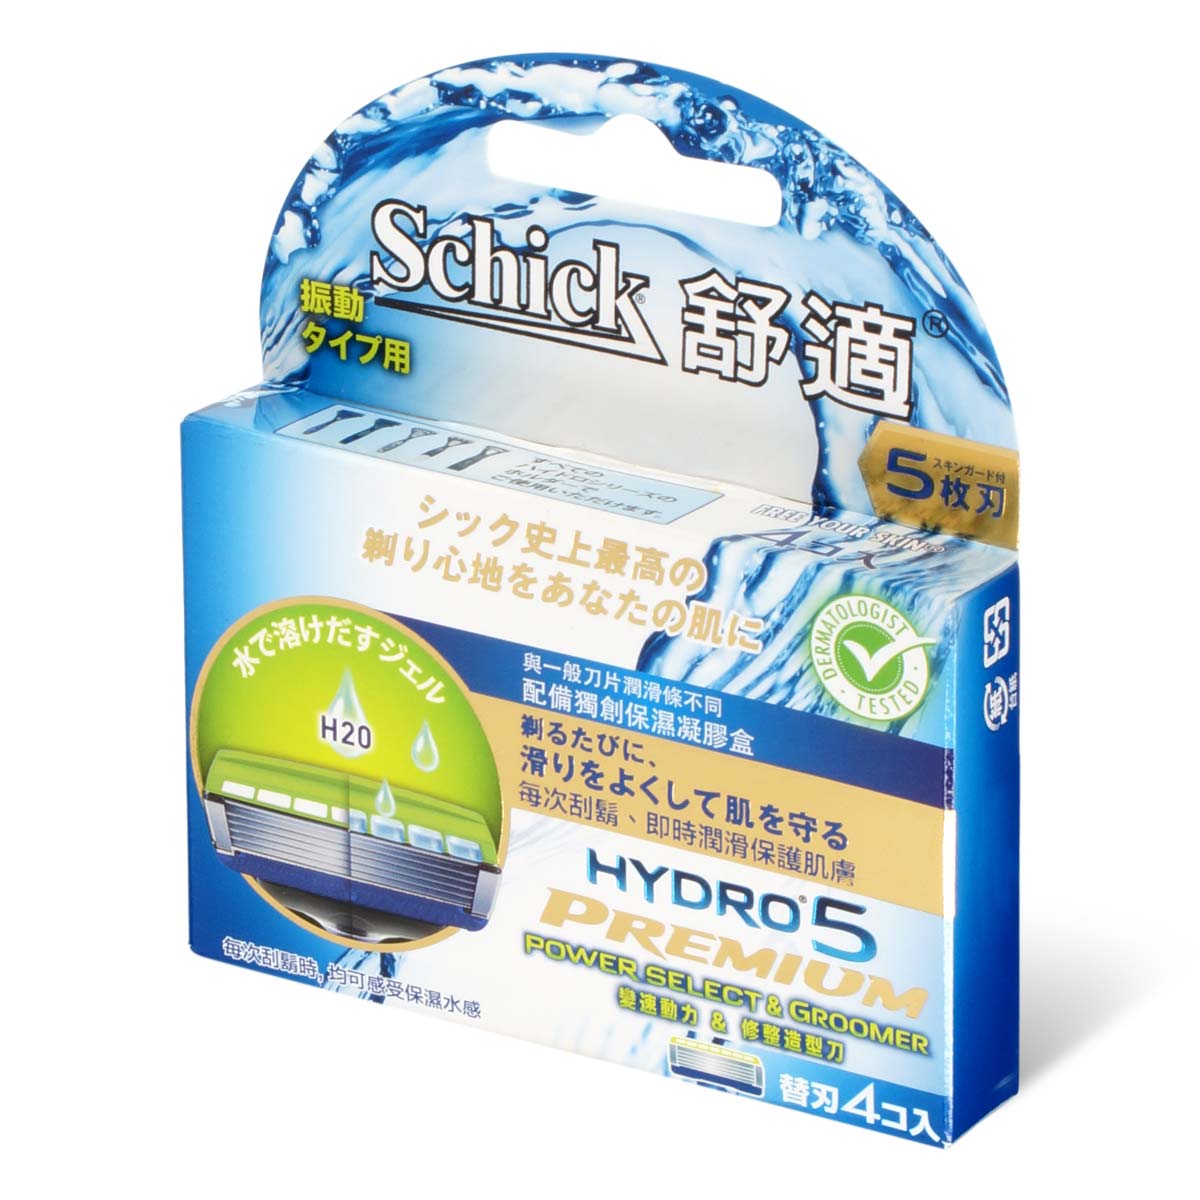 Schick Hydro5 Power Select & Groomer Refill 4's-p_1